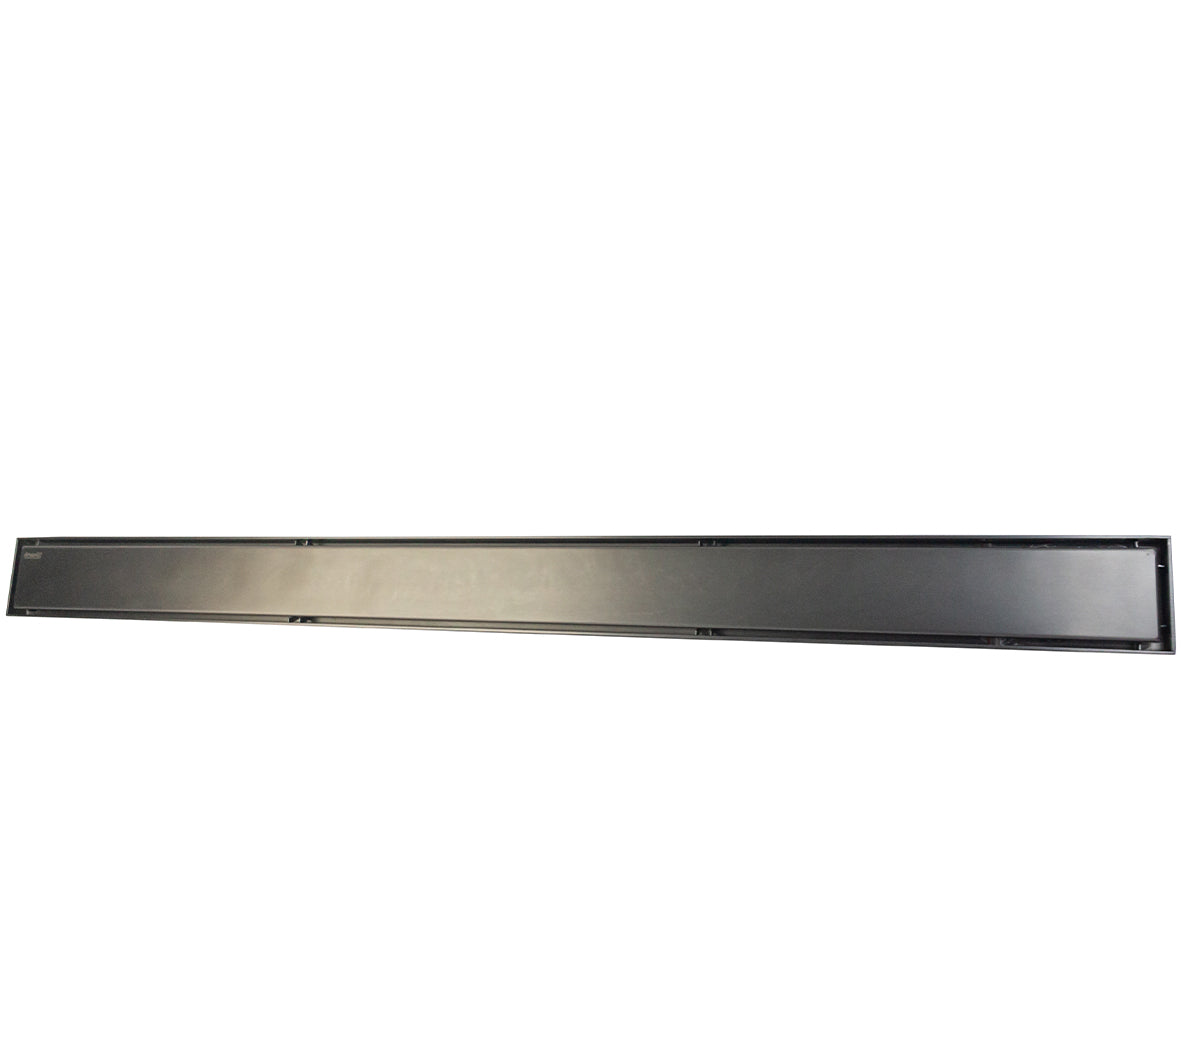 Devario Premio Shower Channel Solid Plate (Long Rectangle) 900mm